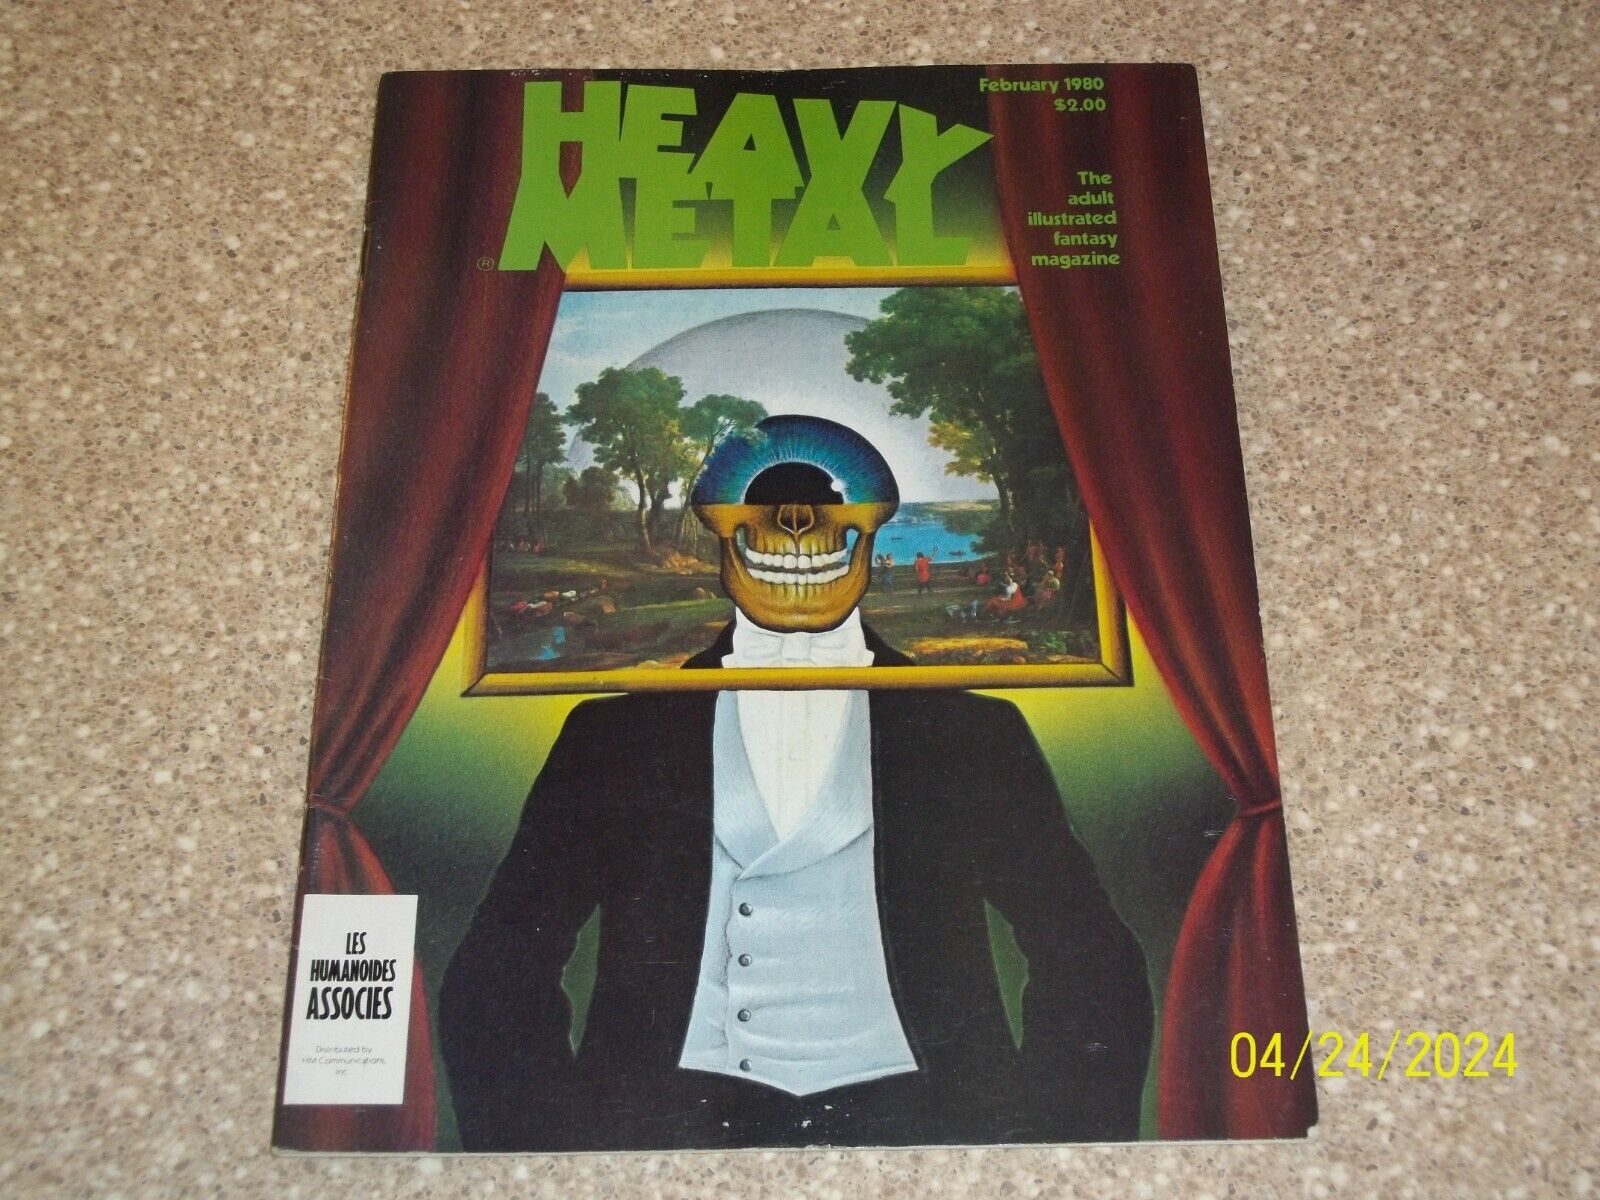 Heavy Metal Magazine February 1980 ~ The Adult Illustrated Fantasy Magazine